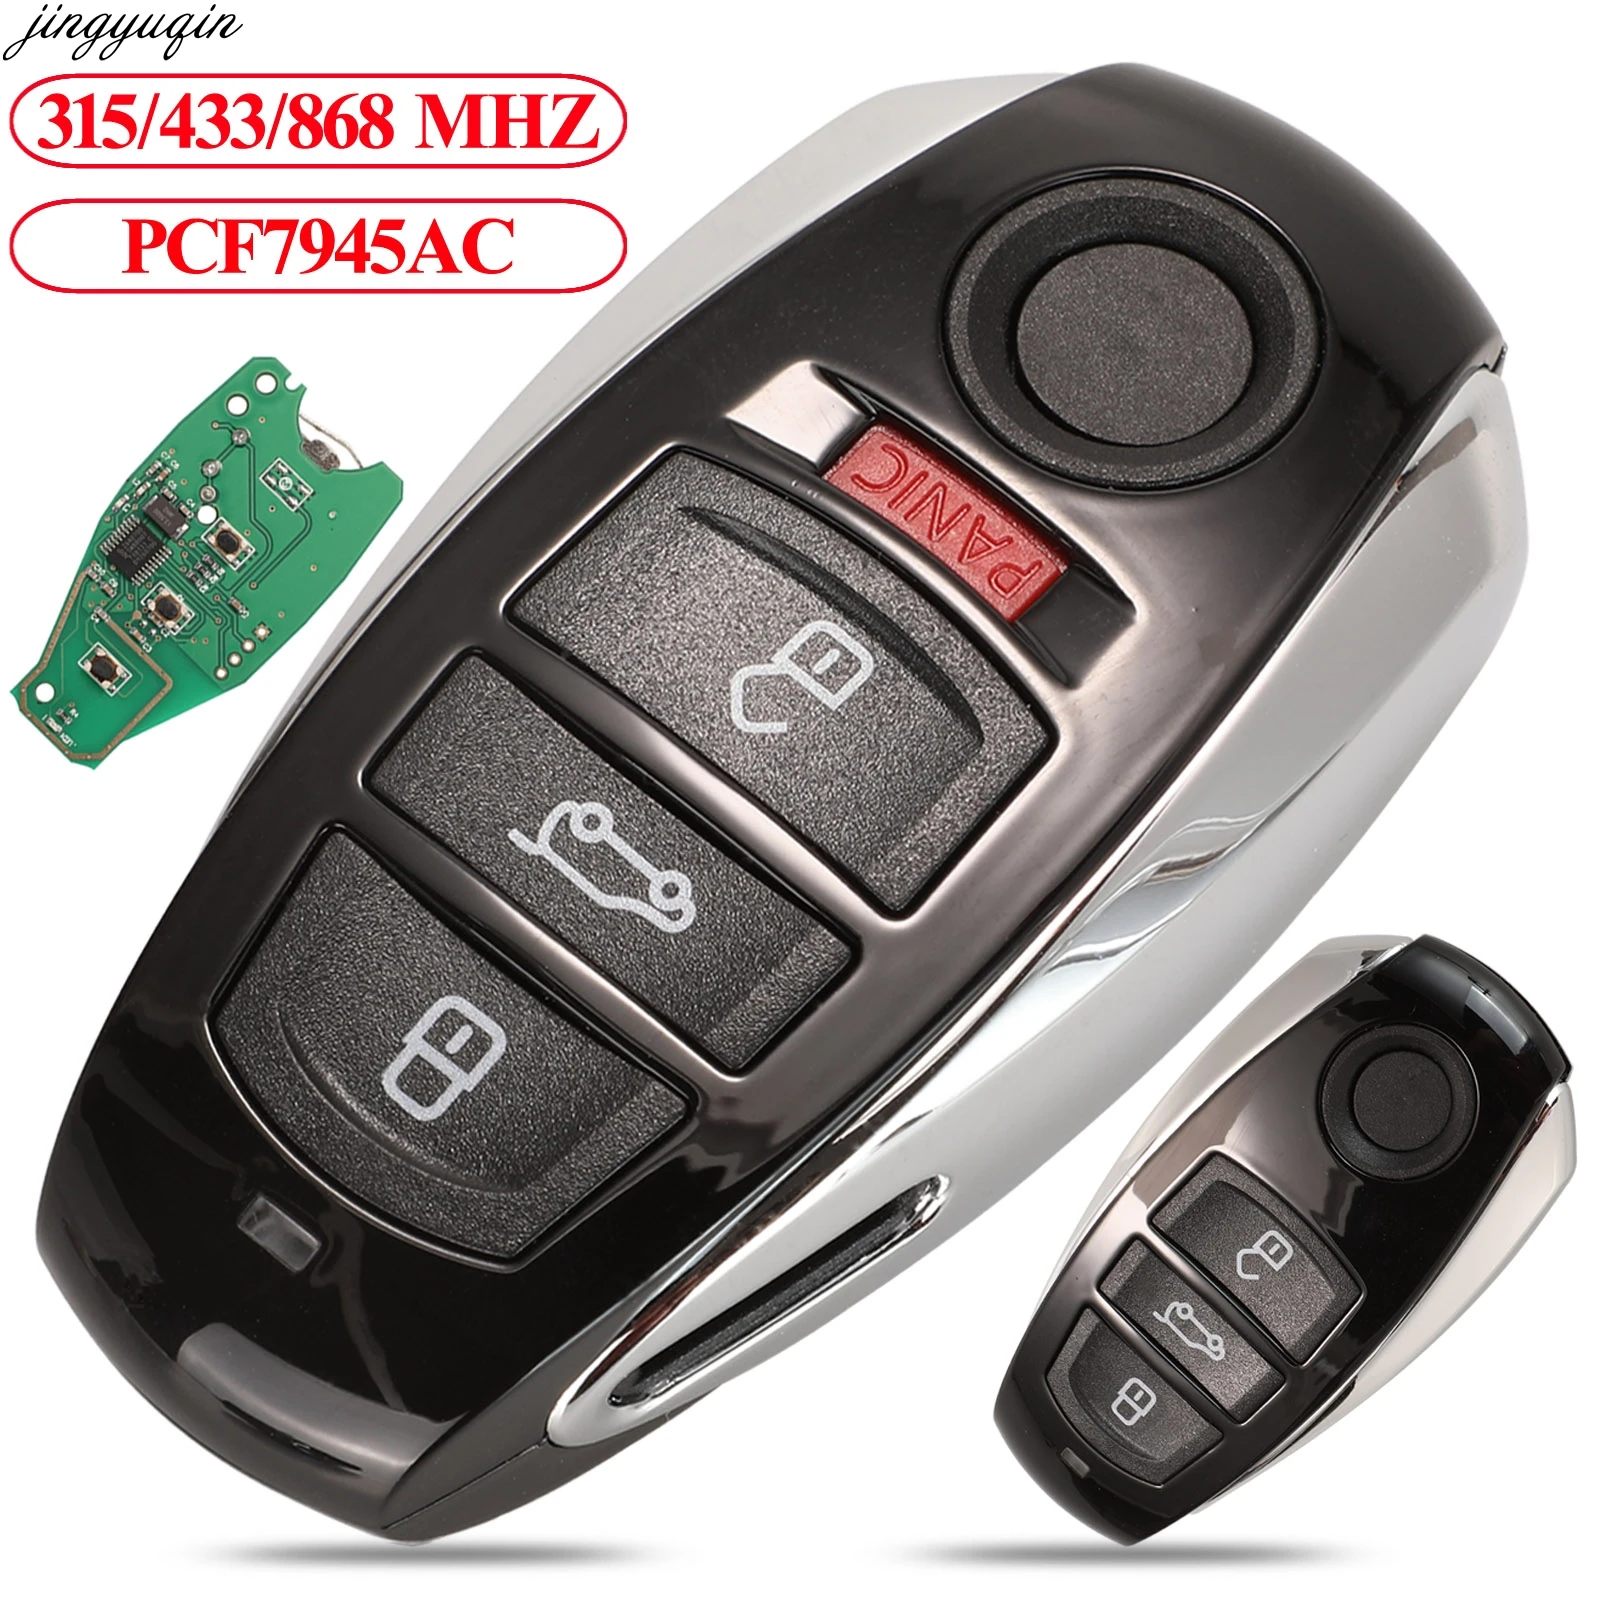 

Jingyuqin Remote Control Car Key 315/433/868Mhz PCF7945AC Chip For VW Volkswagen Touareg 2010-2014 Hitag CVGA Smart Fob 3/4 BTNS